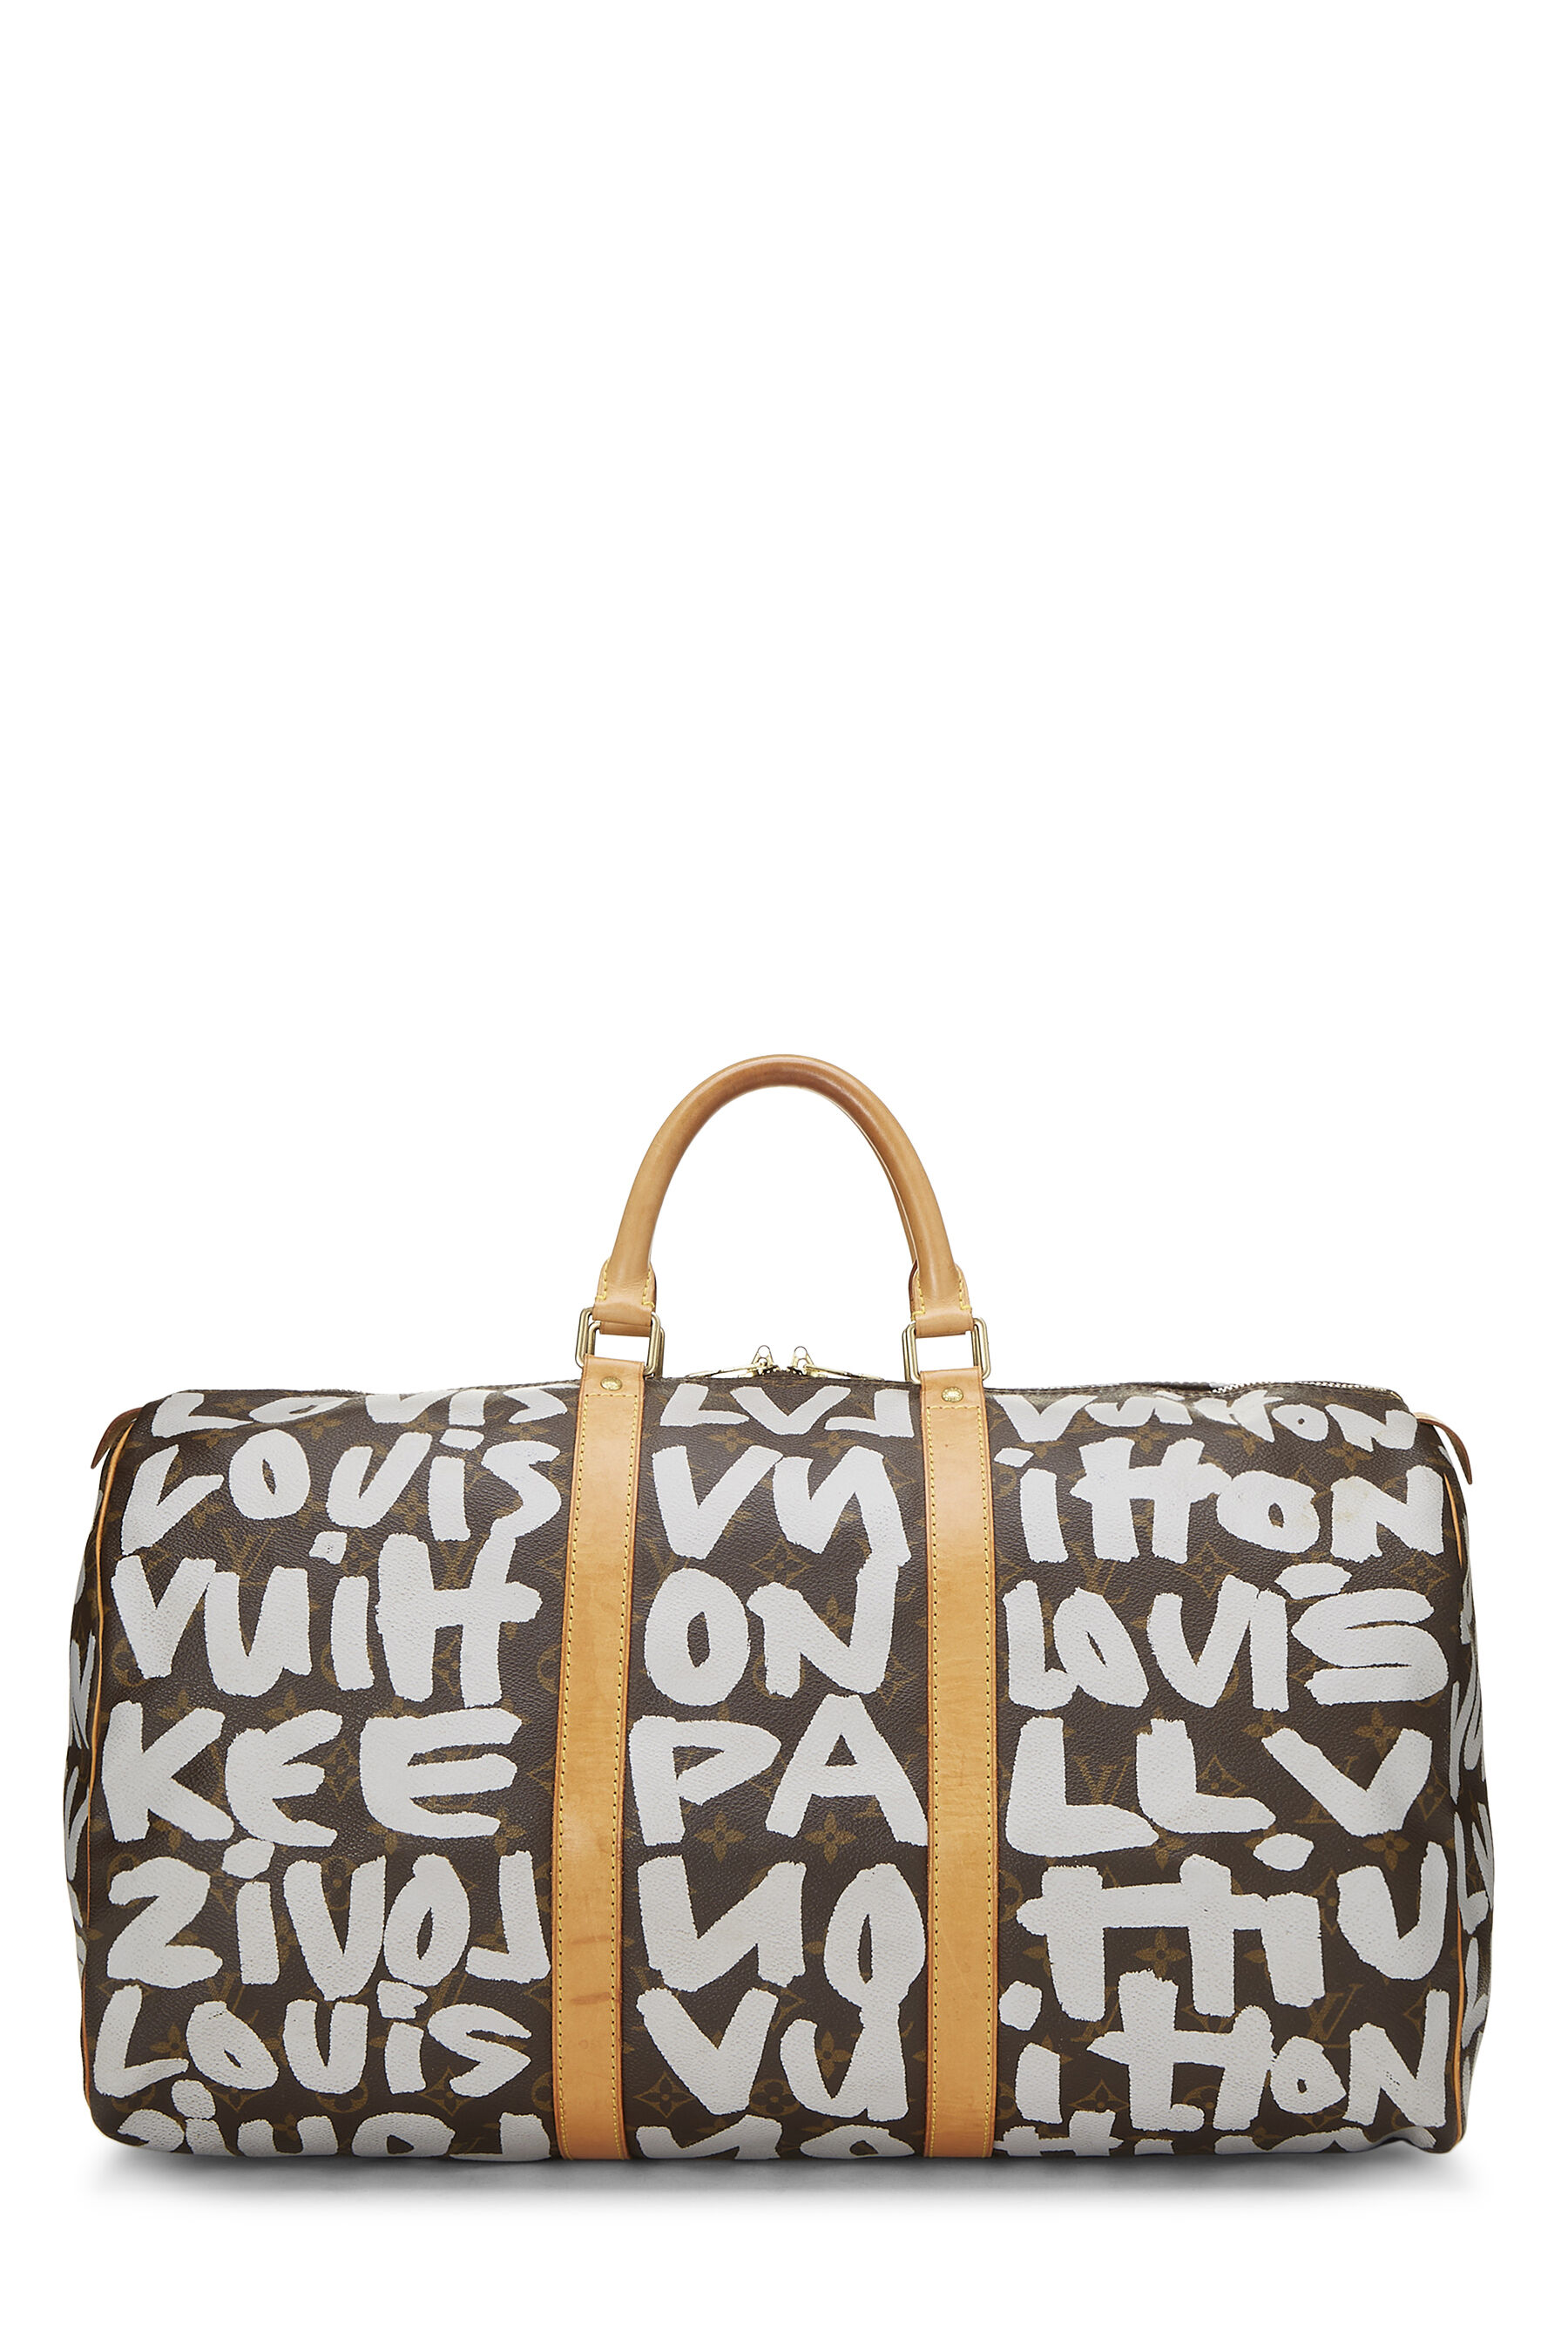 Louis Vuitton x Stephen Sprouse Keepall Monogram Graffiti 50 Brown/Khaki -  US